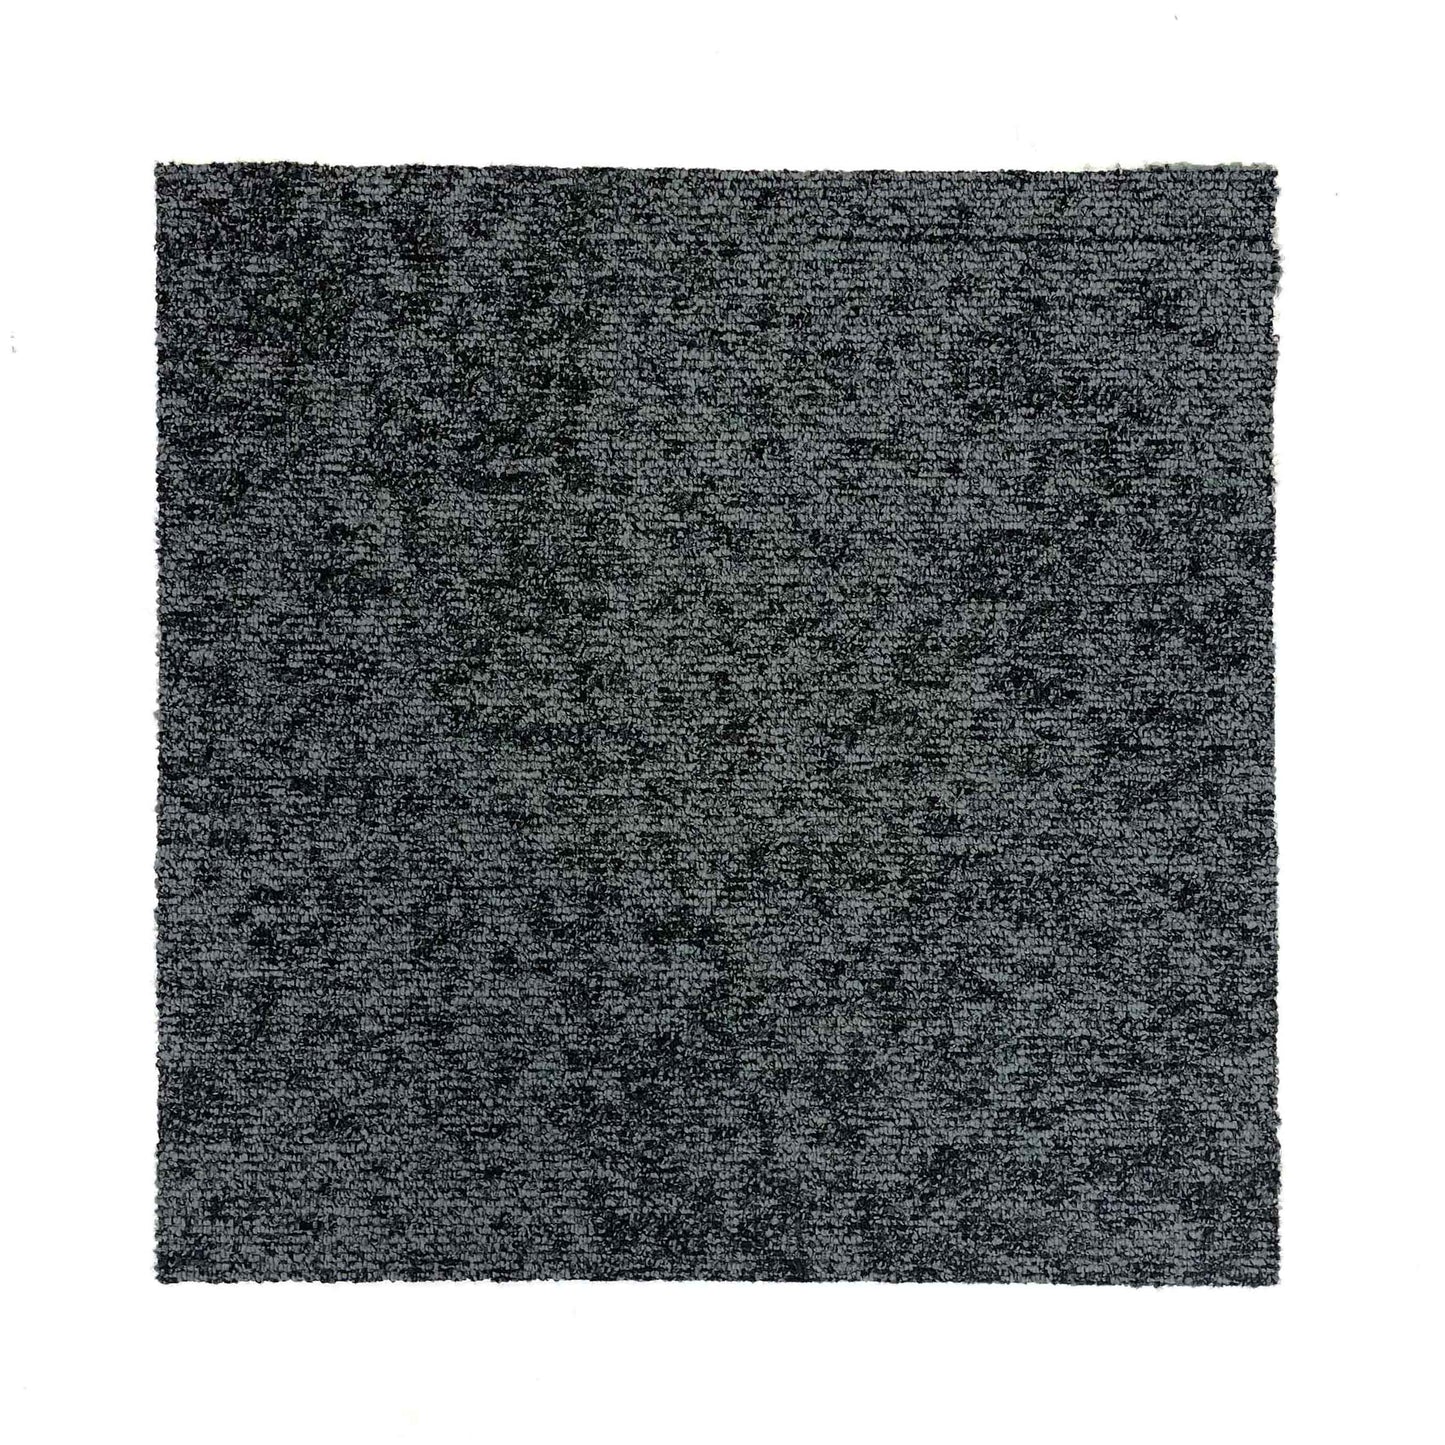 Dark Grey Patch Patterned Carpet Tiles